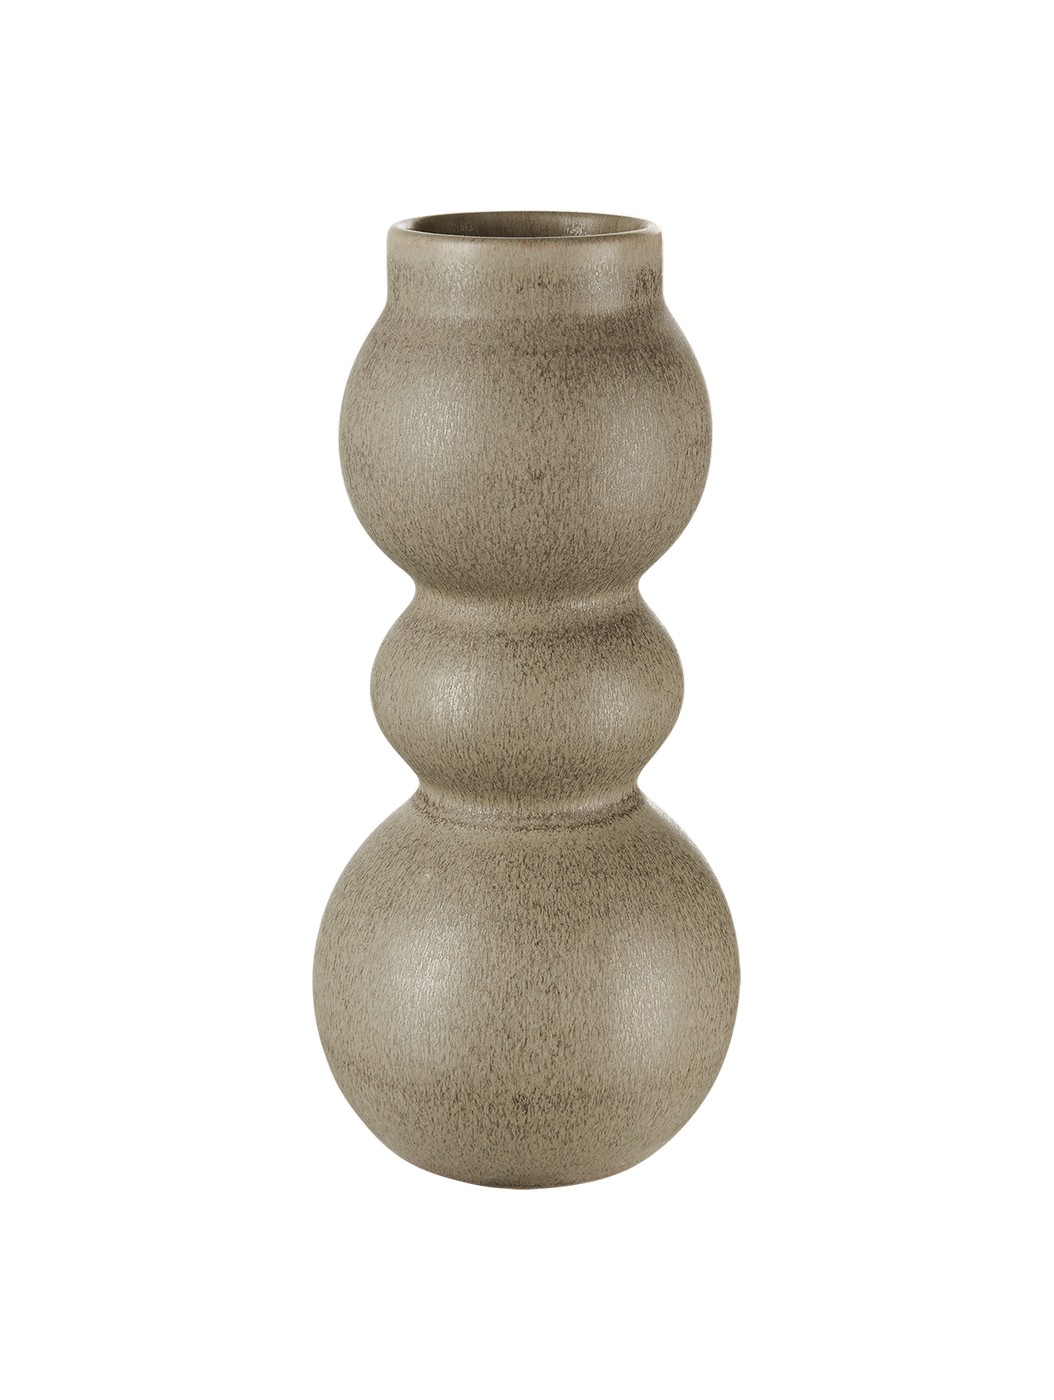 Kameninová váza  výška 19 cm COMO ASA Selection - šedohnědá